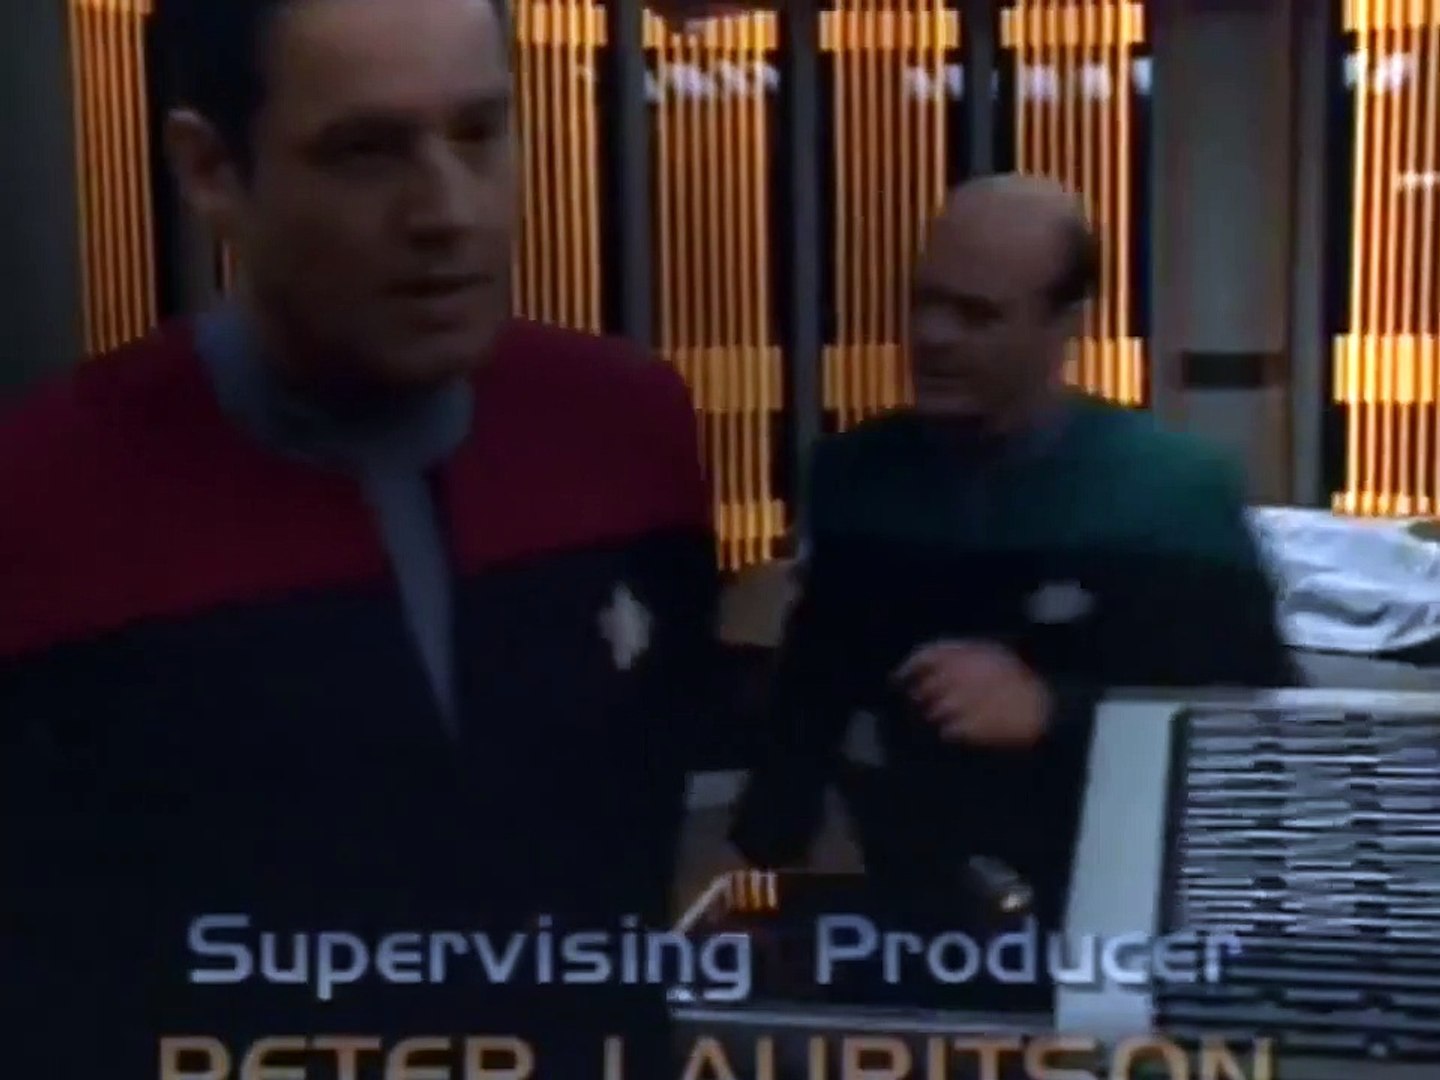 Star Trek Voyager s04e01 Scorpion Part 2 x264 LMK - Dailymotion Video